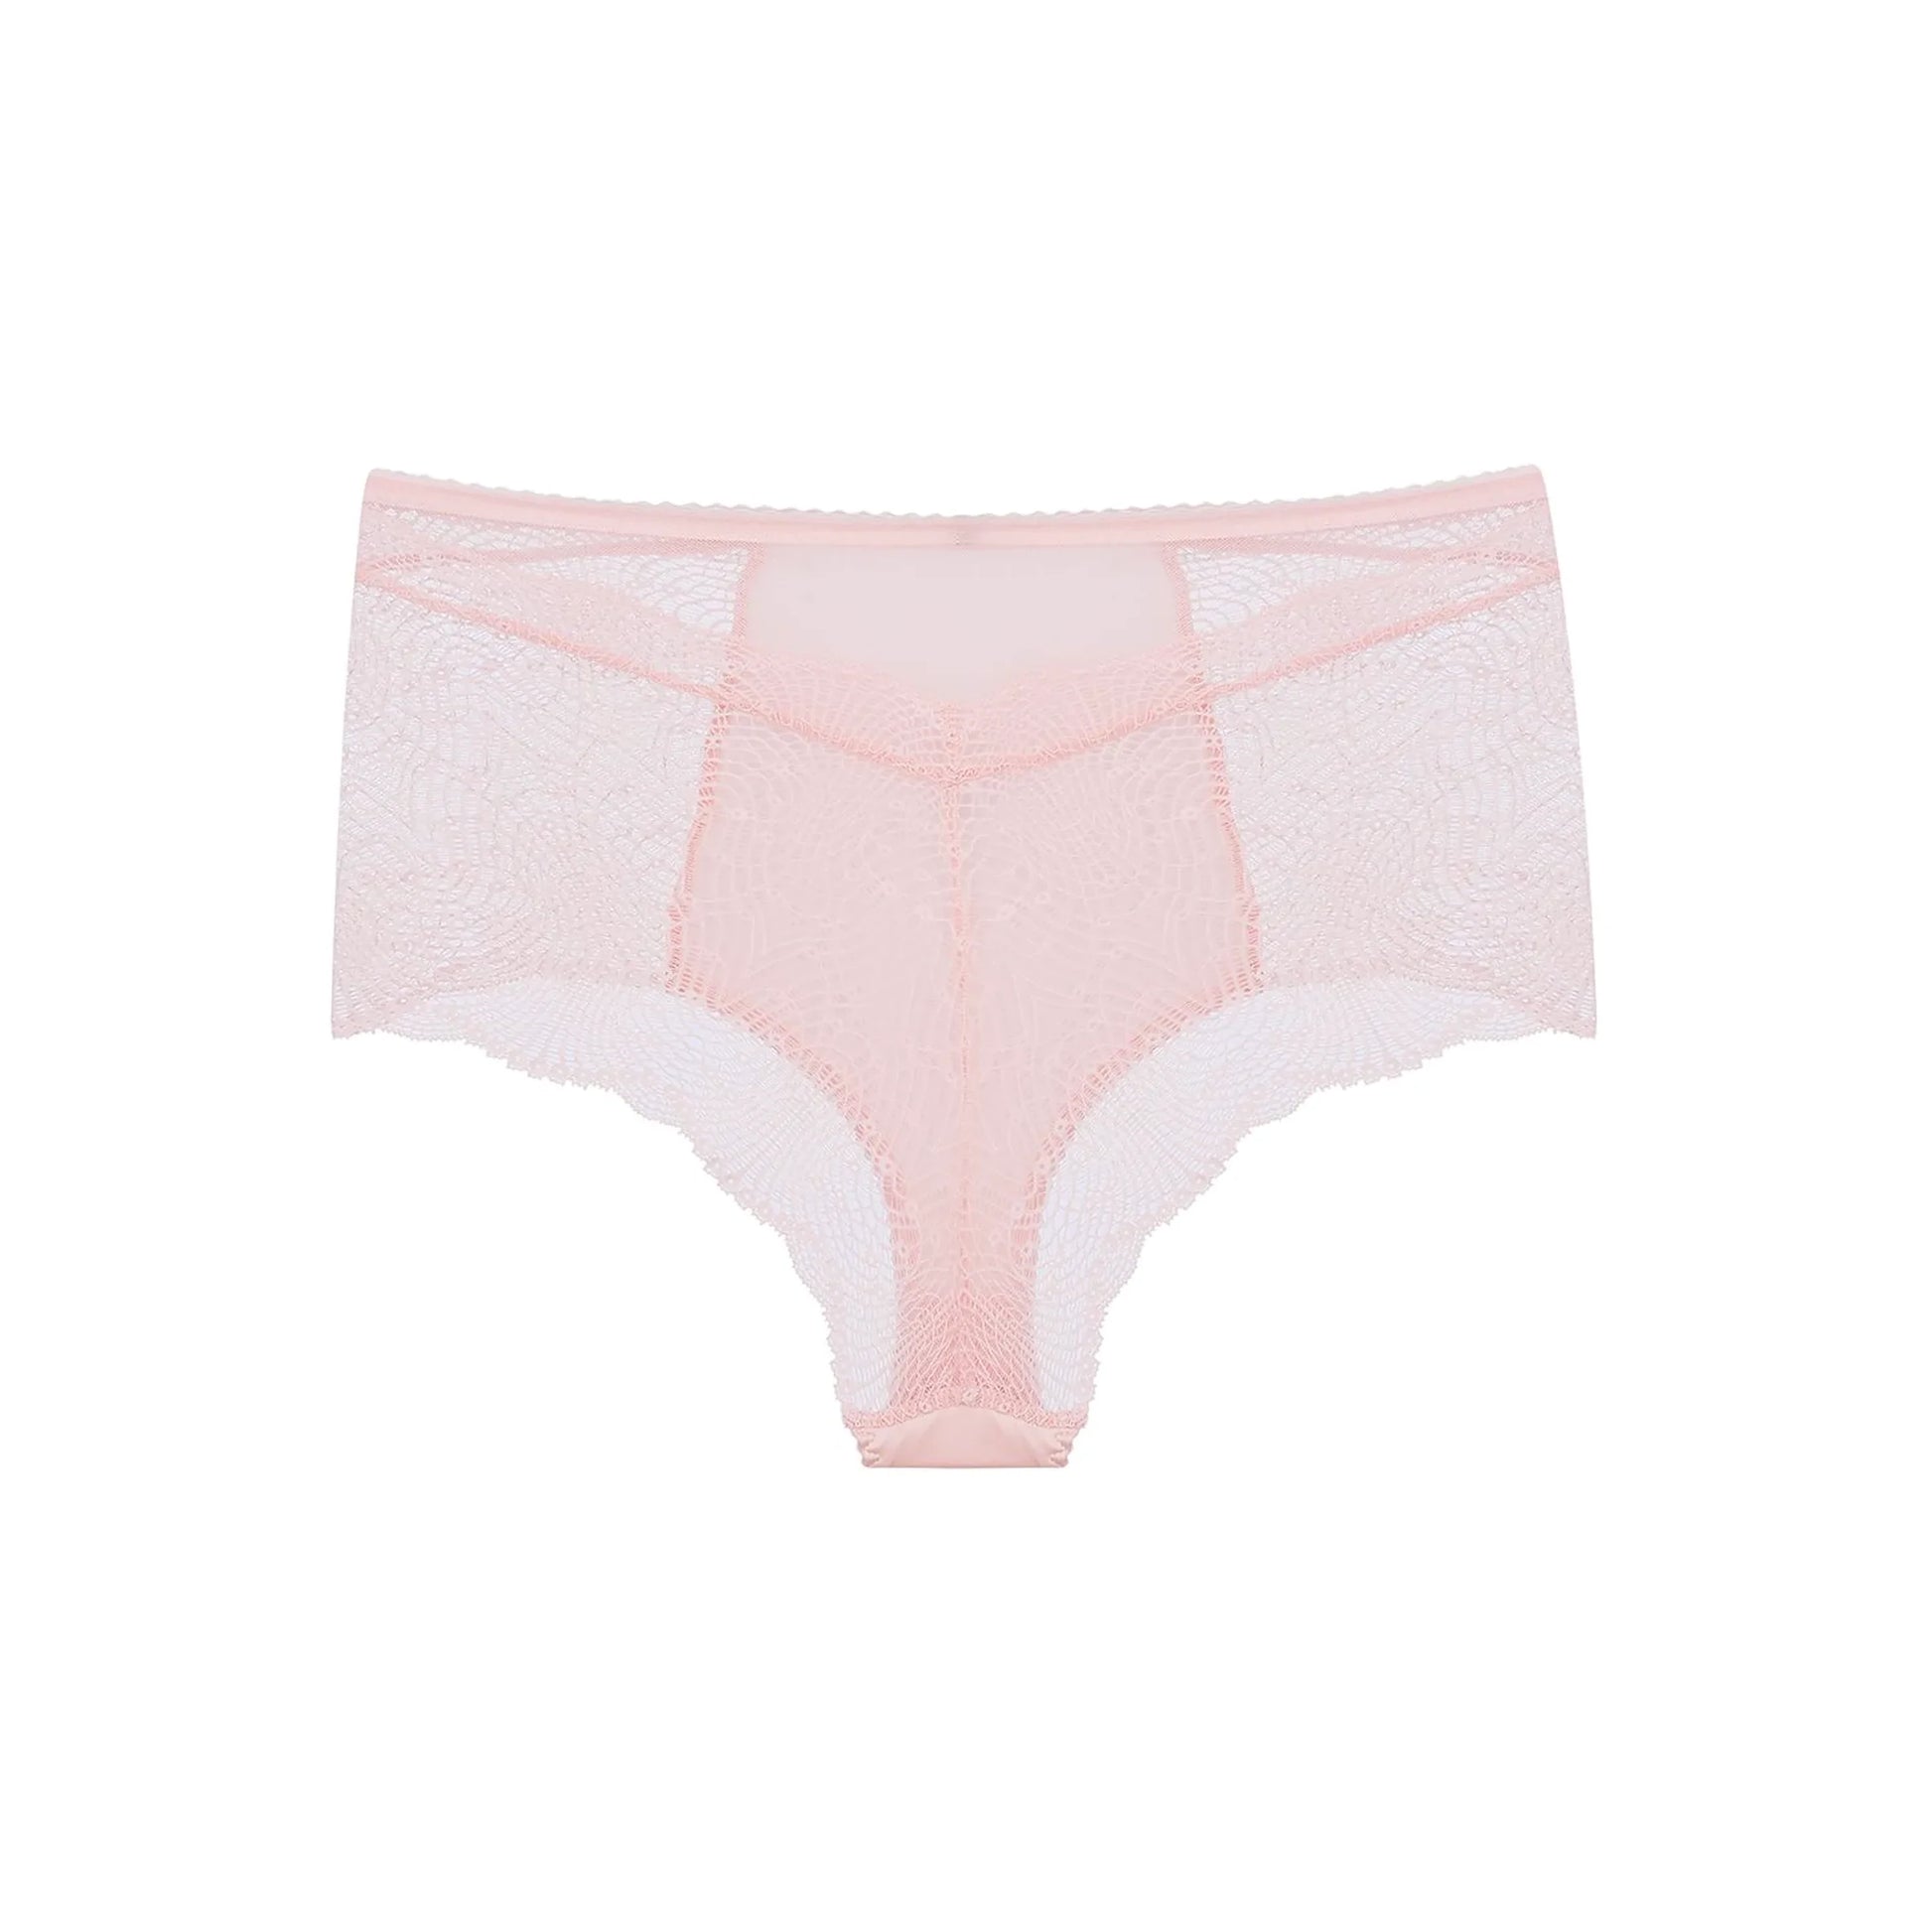 Fiesty Pant in Lotus Pink by LoveRose Lingerie